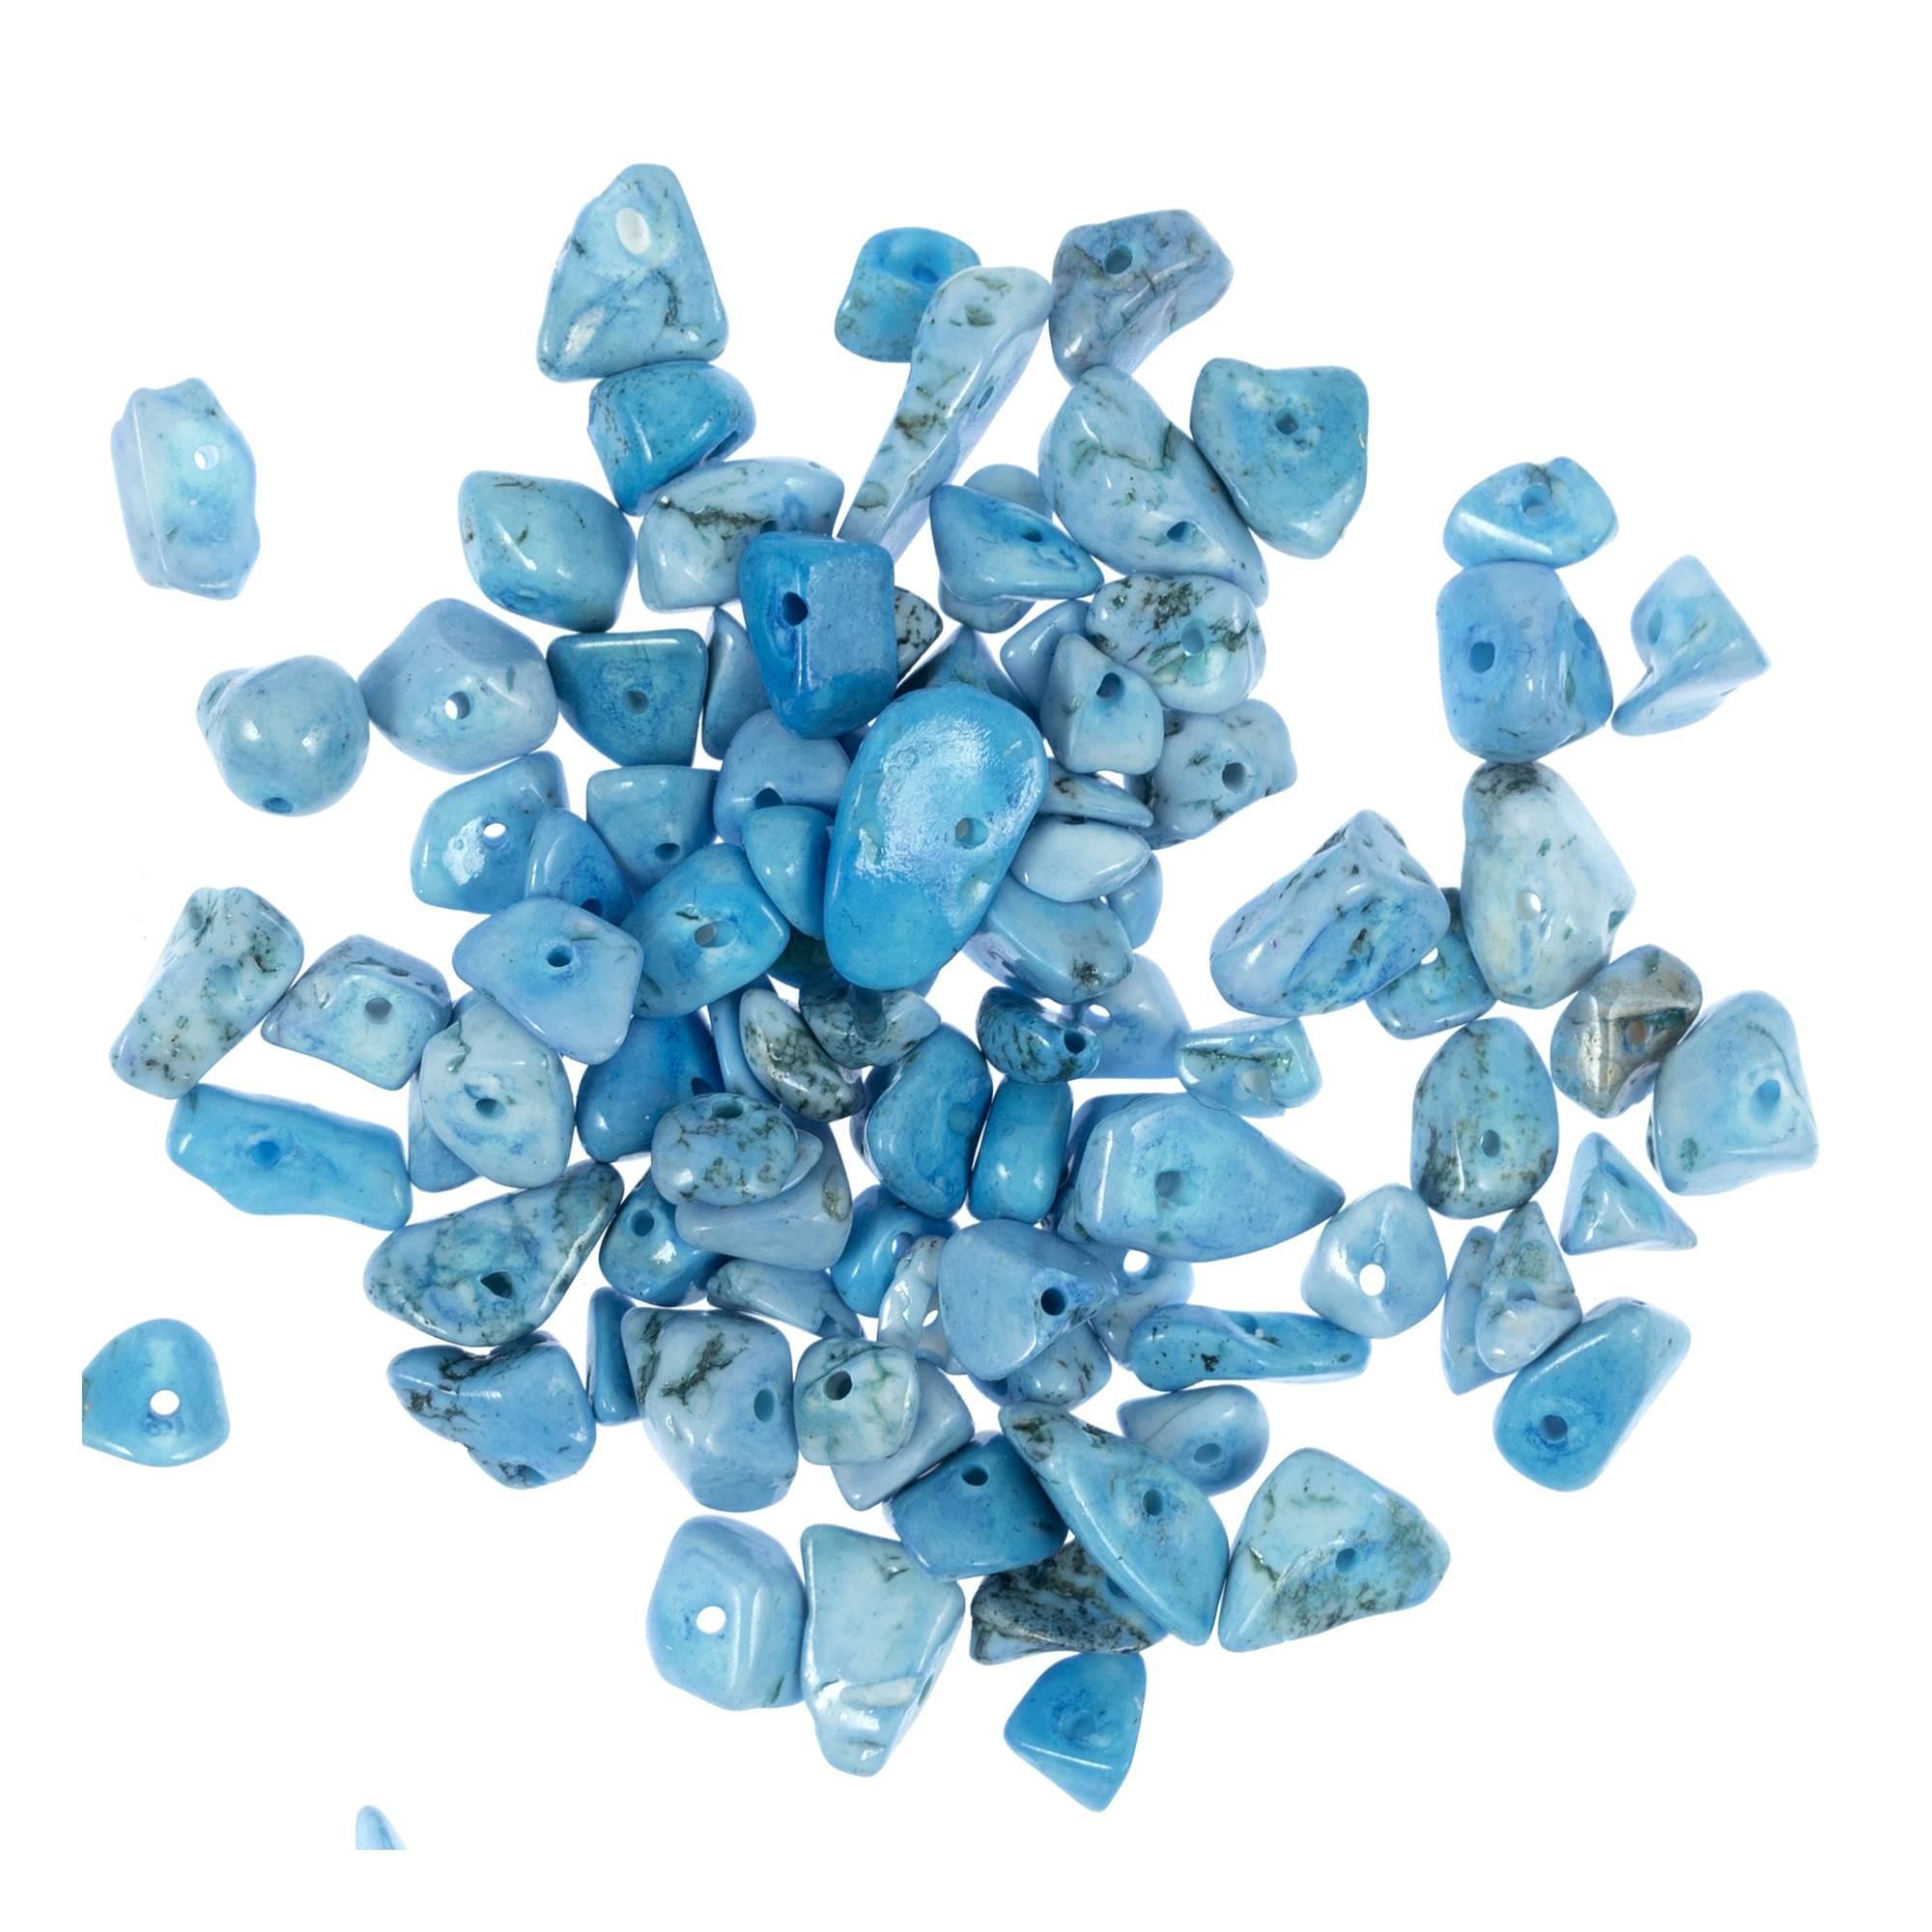 Dark Blue Gem Stones 30g